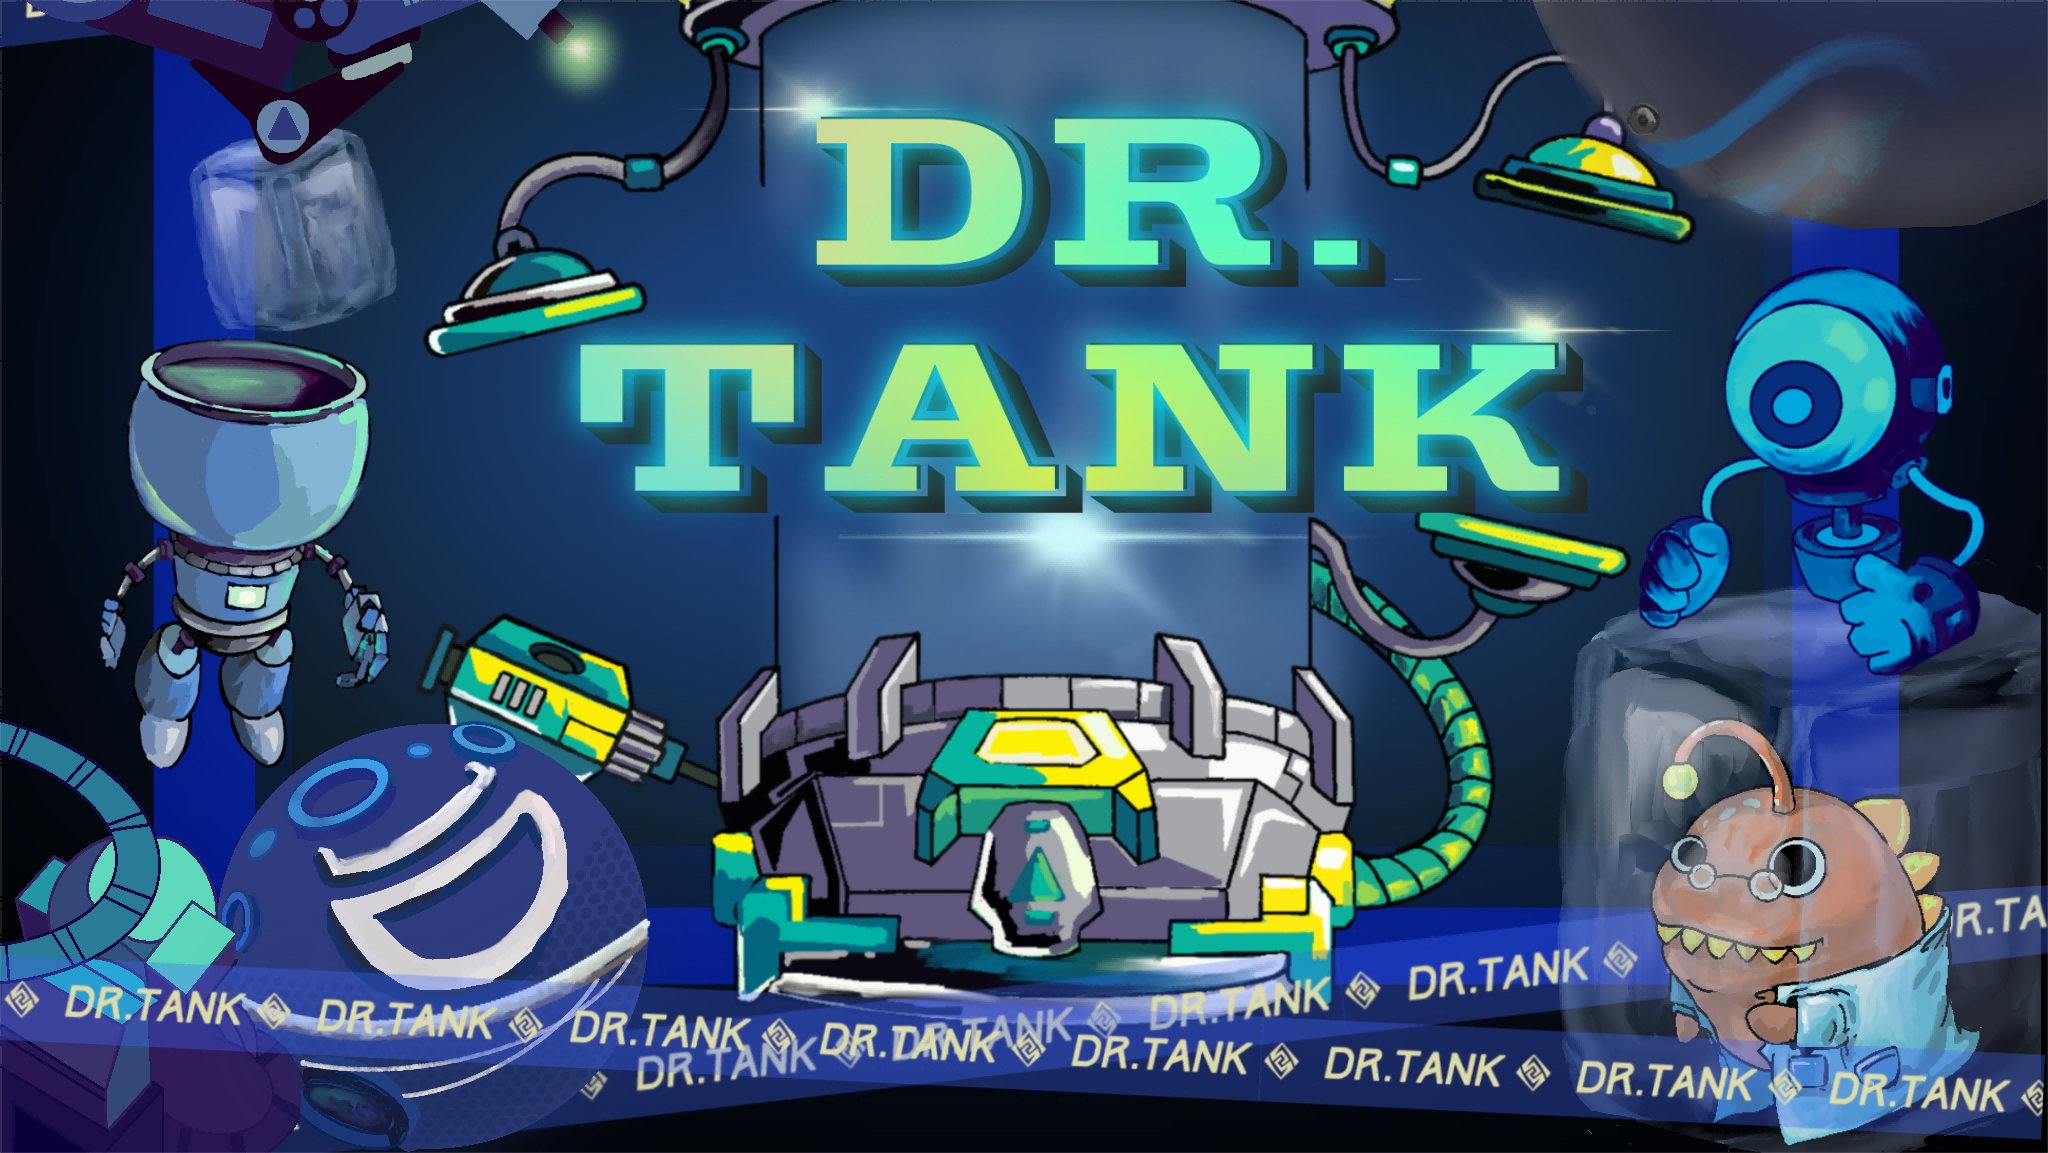 DR.TANK